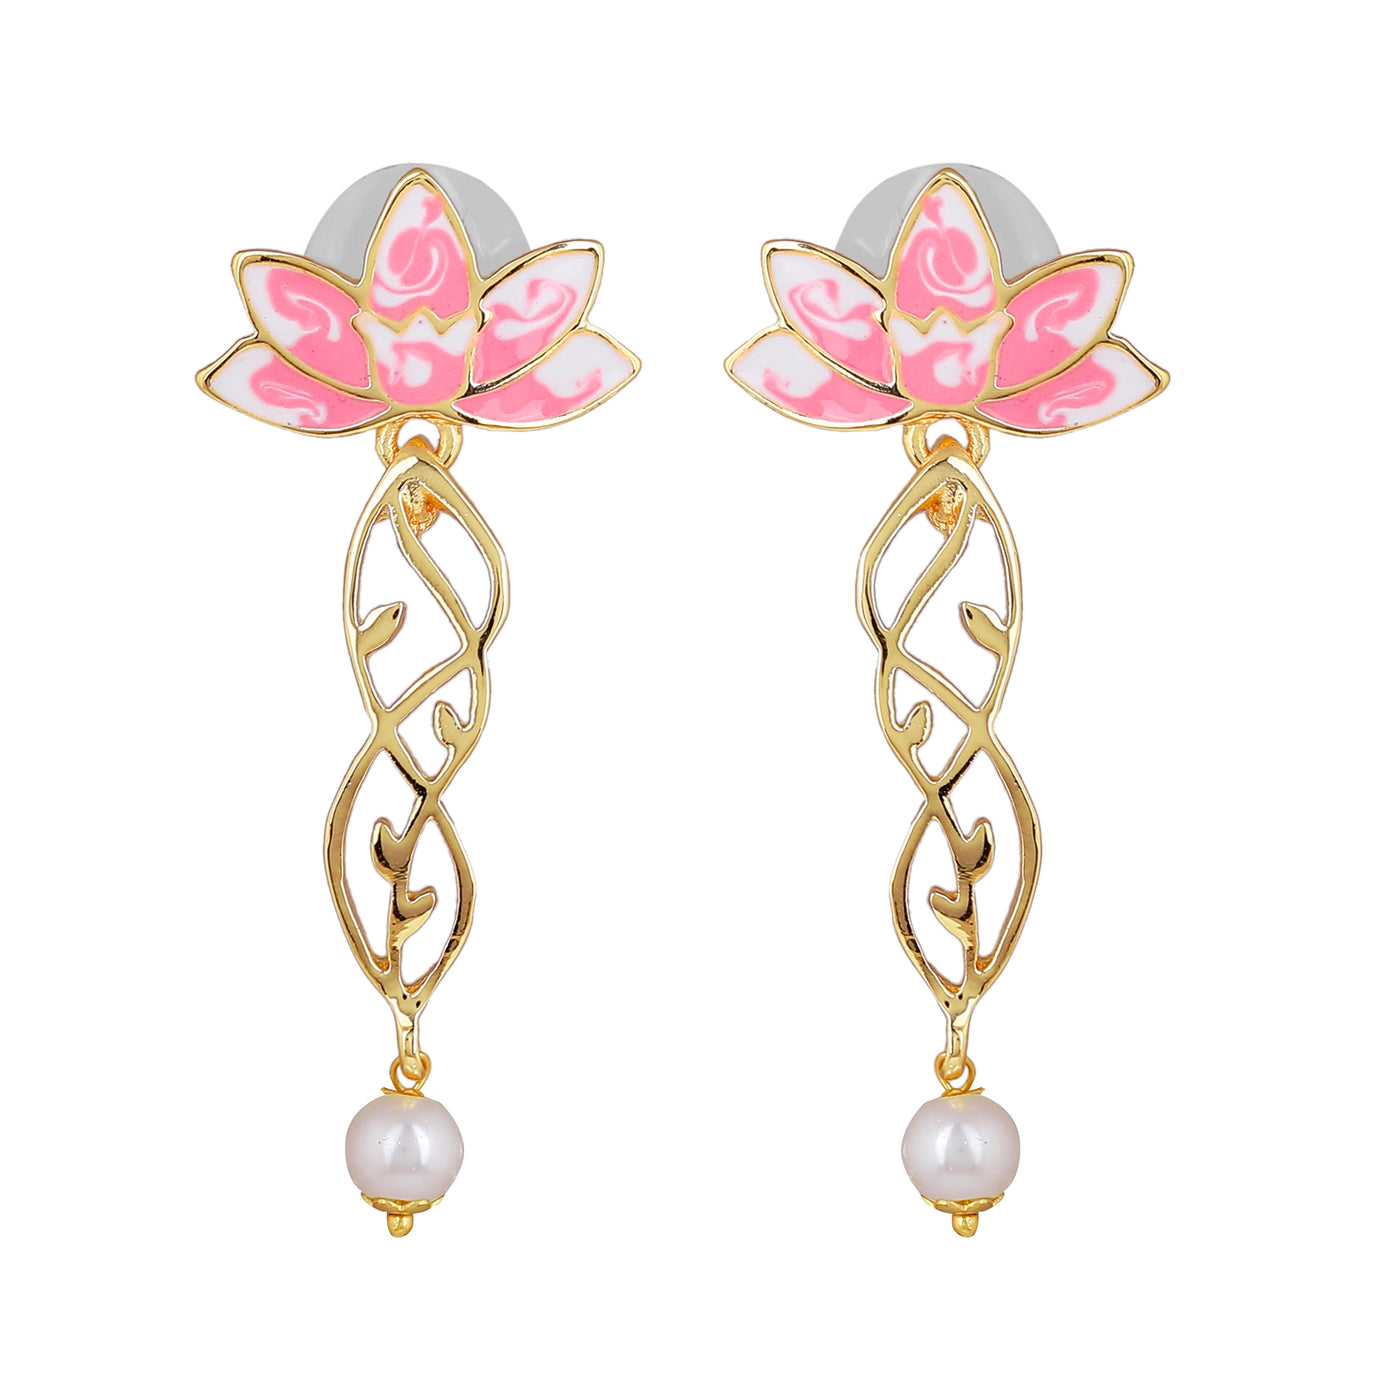 Estele Gold Plated Lotus Flower & Leaf Shaped Pearl Drop Earrings with Pink Enamel for Girl's & Women